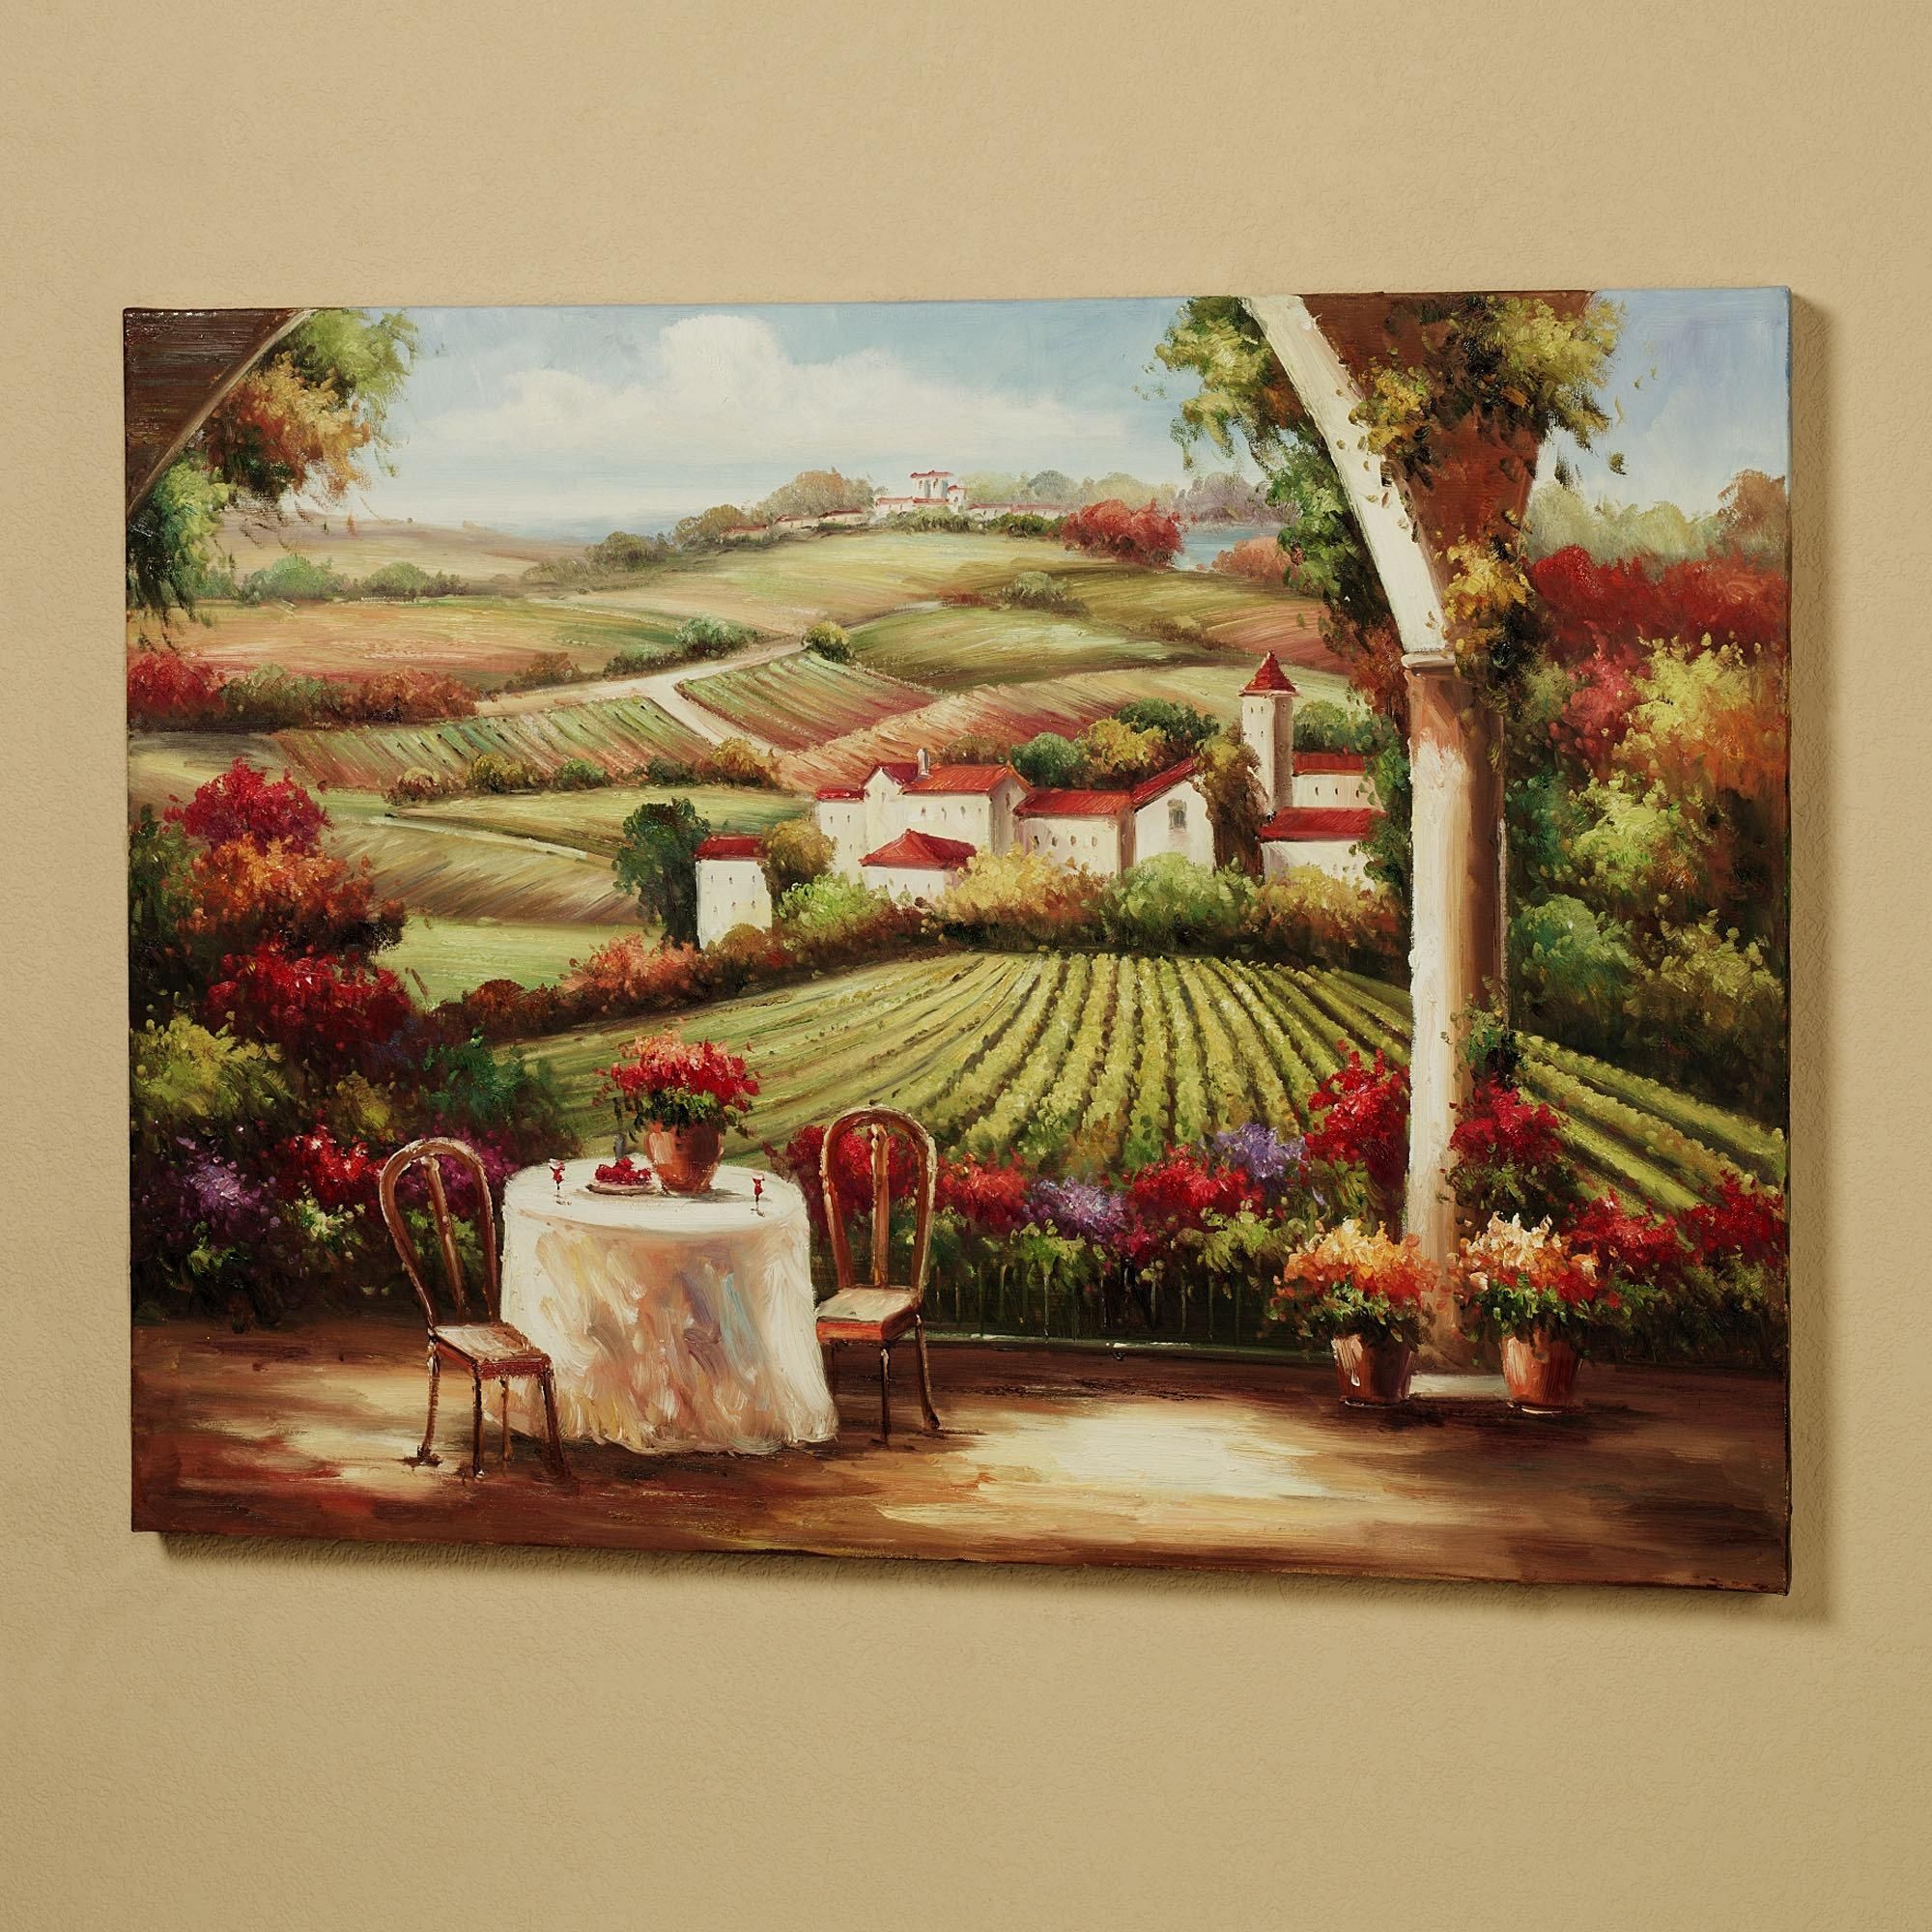 Wall Art Designs: Terrific Vineyard Wall Art Wine Decor Kitchen Inside Italian Wine Wall Art (View 9 of 20)